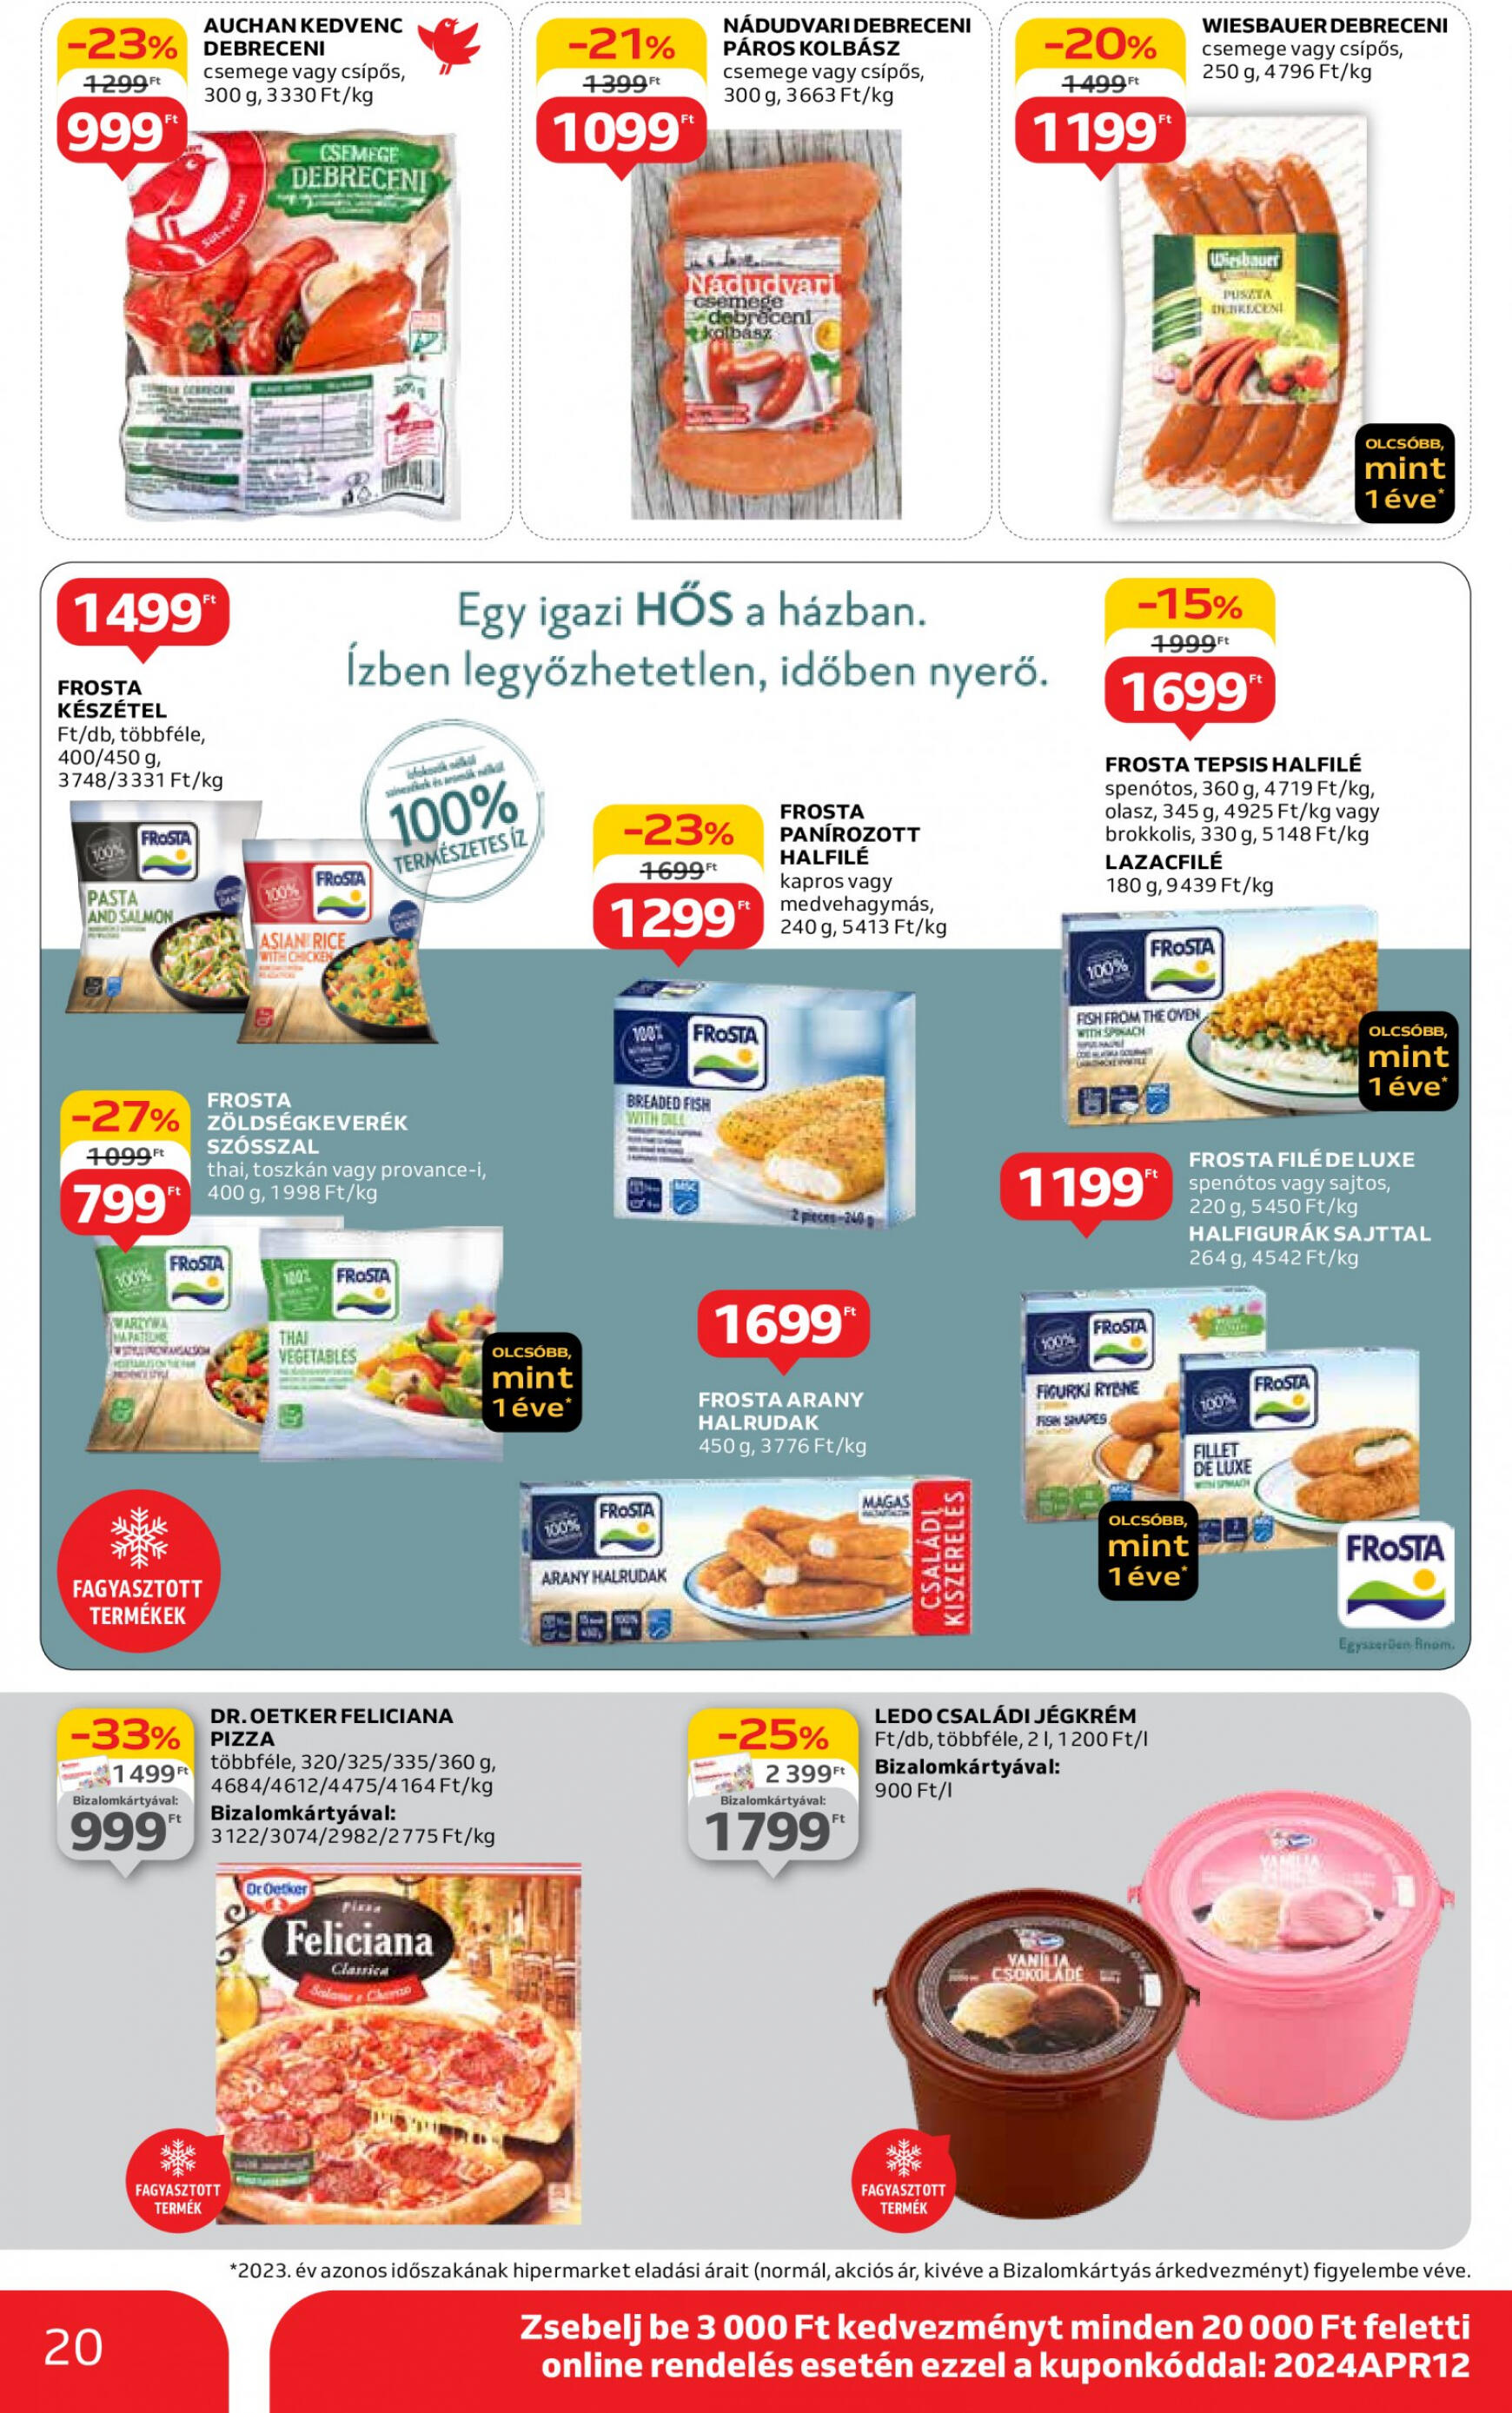 auchan - Aktuális újság Auchan 04.18. - 04.24. - page: 20